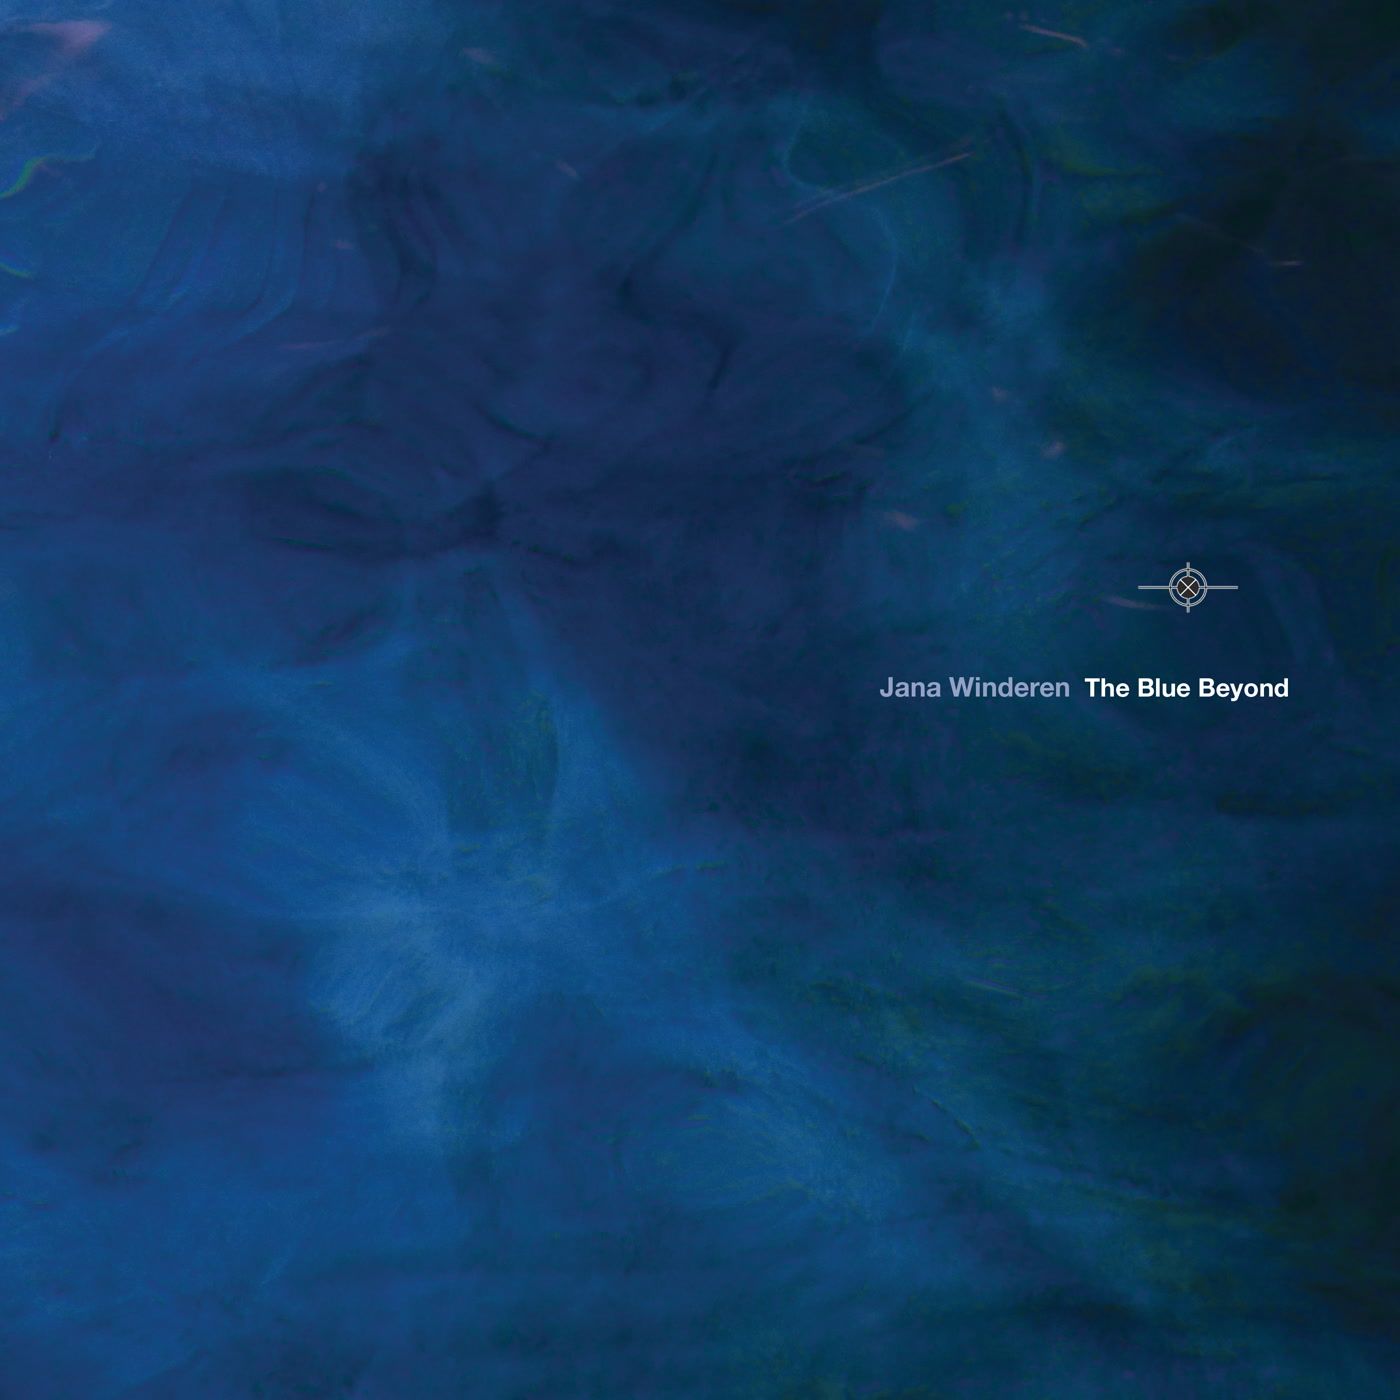 JANA WINDEREN / THE BLUE BEYOND